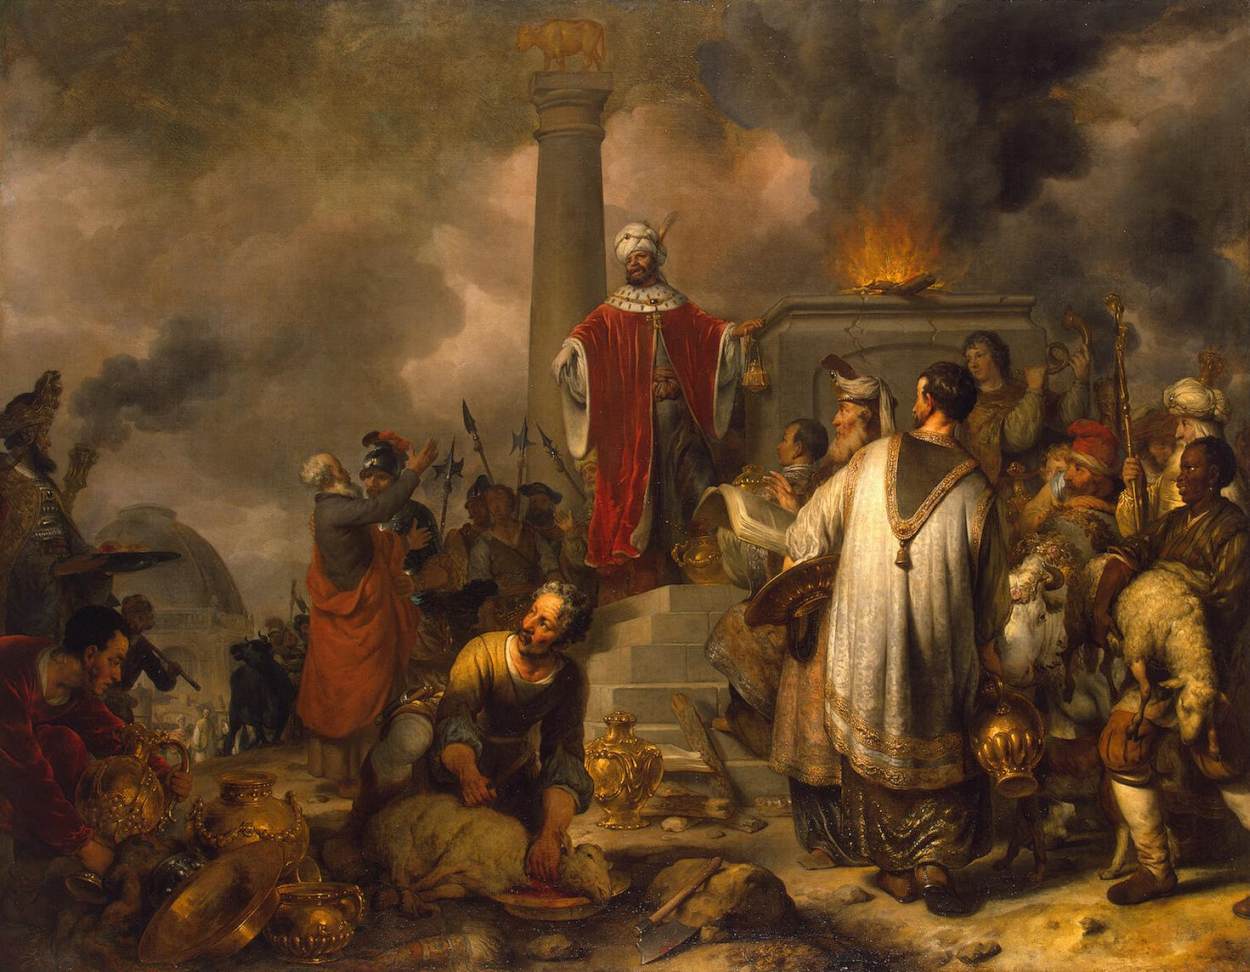 Ofiara Jeroboam w Betel